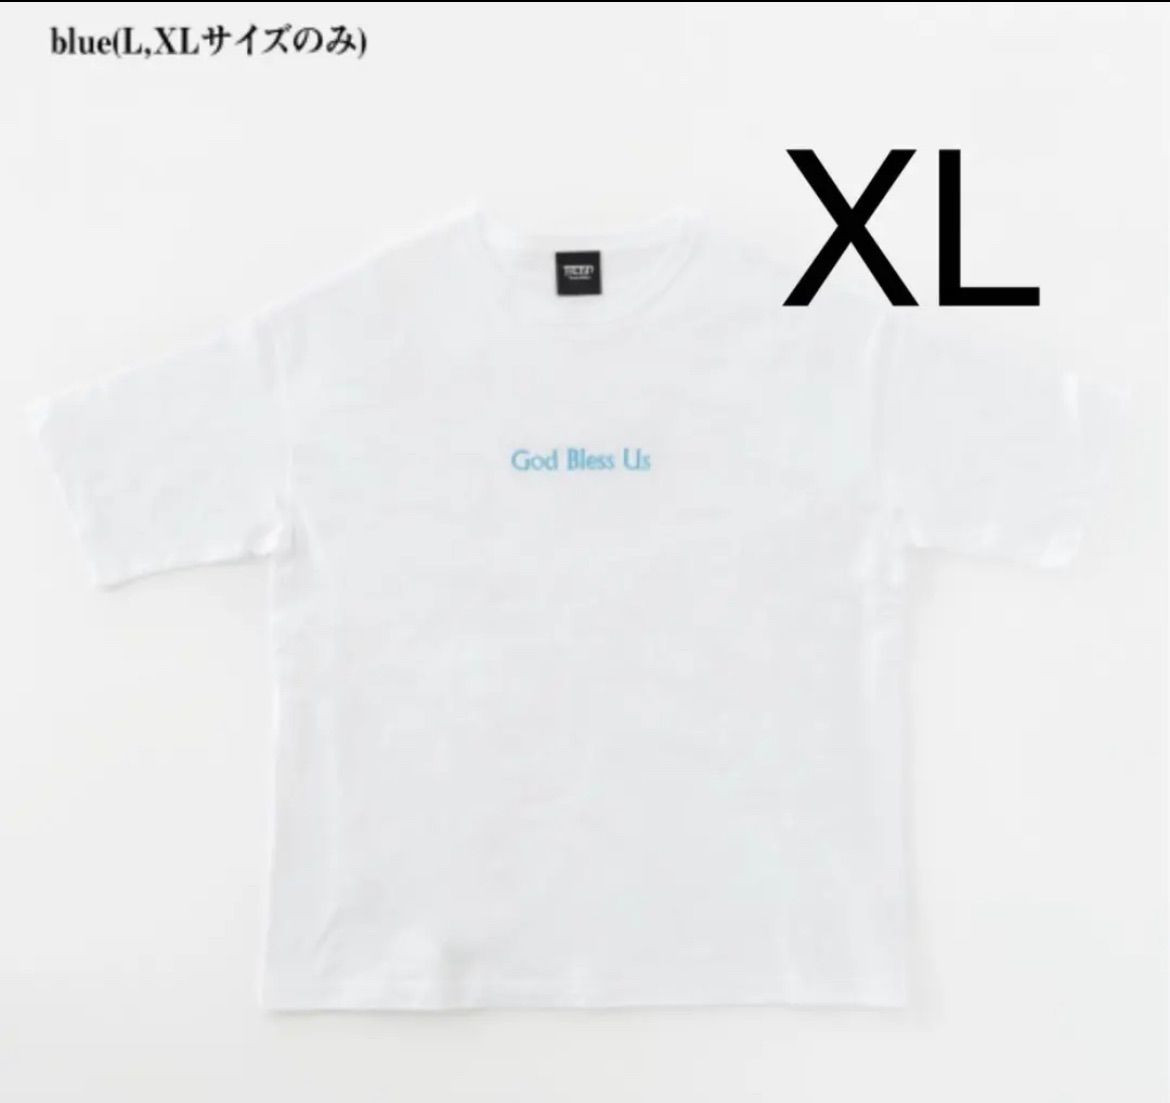 XLサイズ 藤井風 God Bless Us Tシャツ HEHN 新品 グッズ - メルカリ